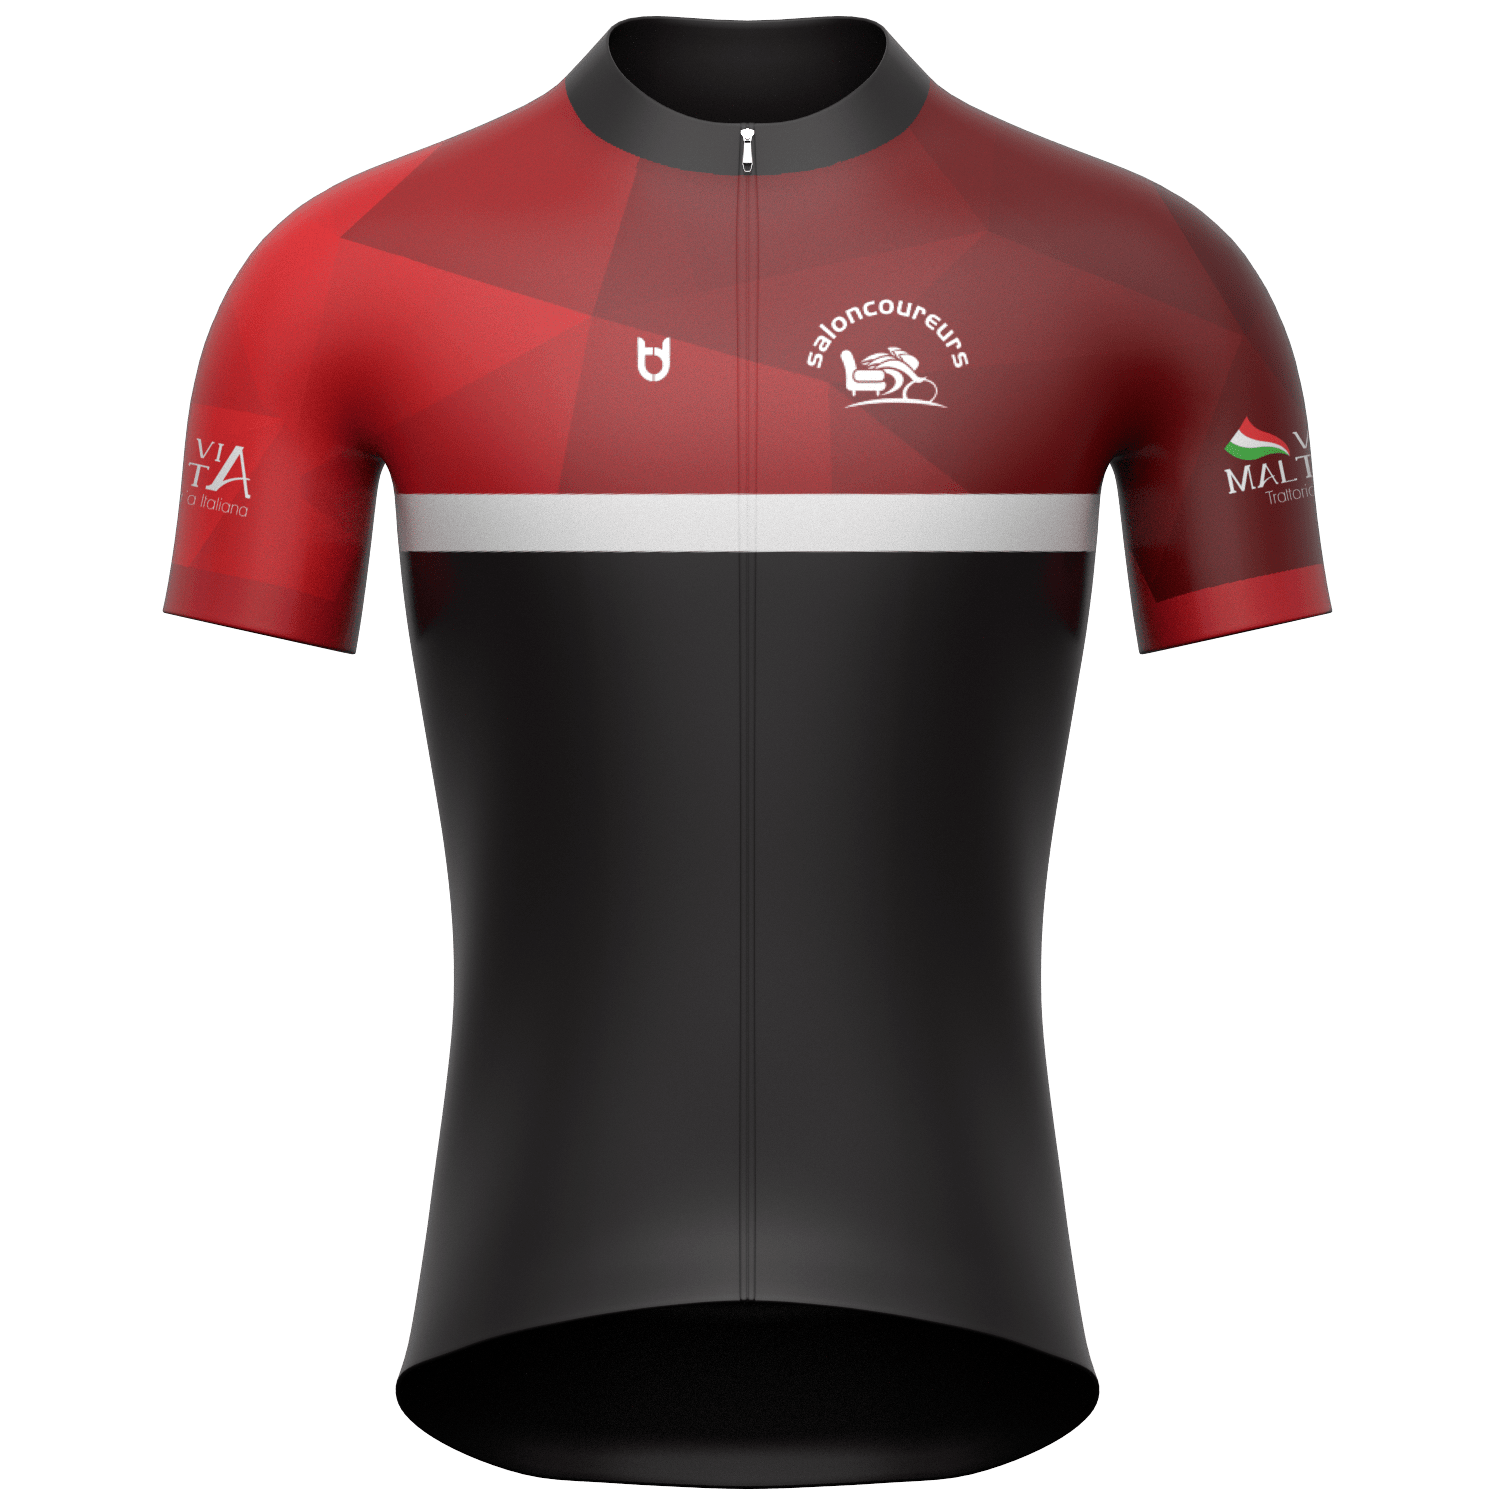 TD sportswear custom cycling jersey - TD sportswear - Custom sportswear.